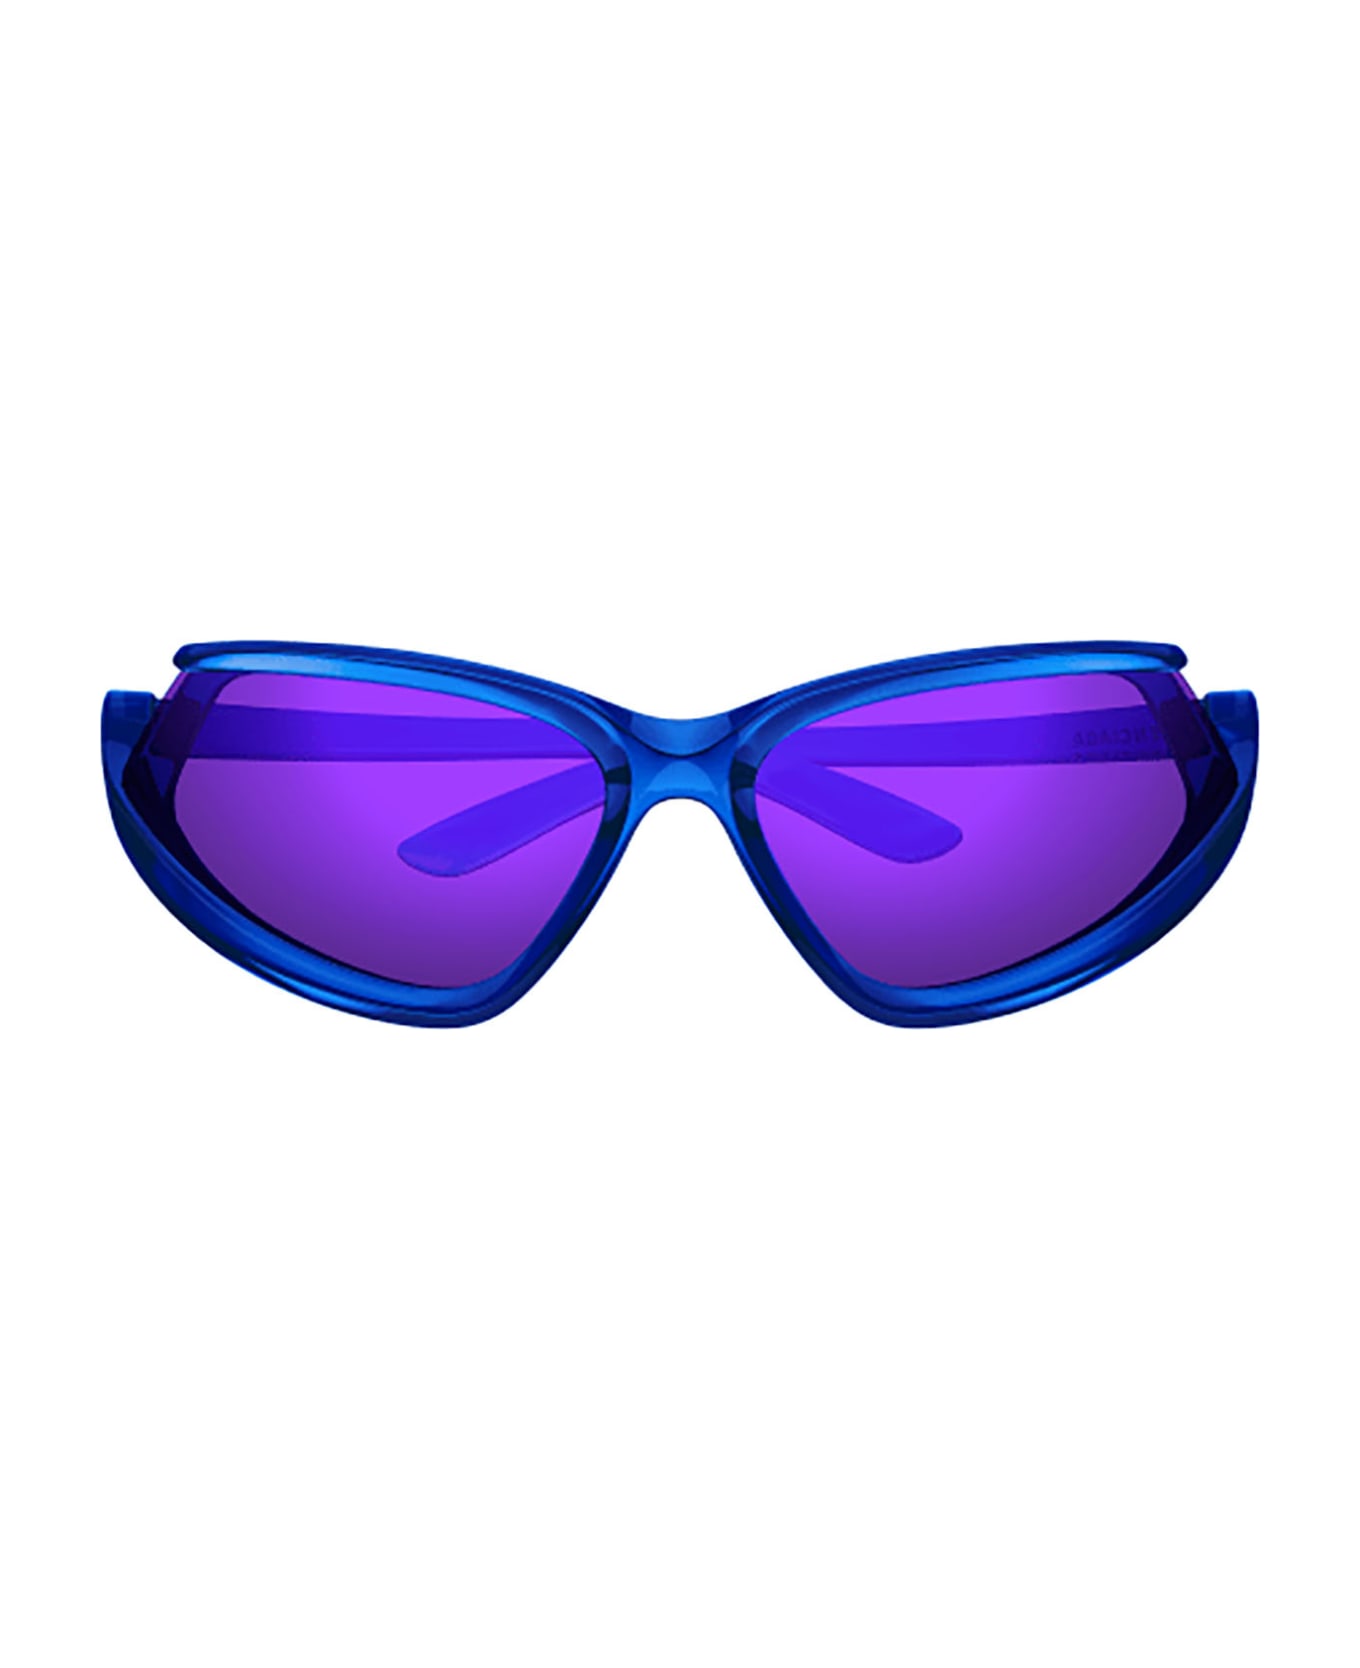 Balenciaga Eyewear BB0289S Sunglasses - Blue Blue Violet